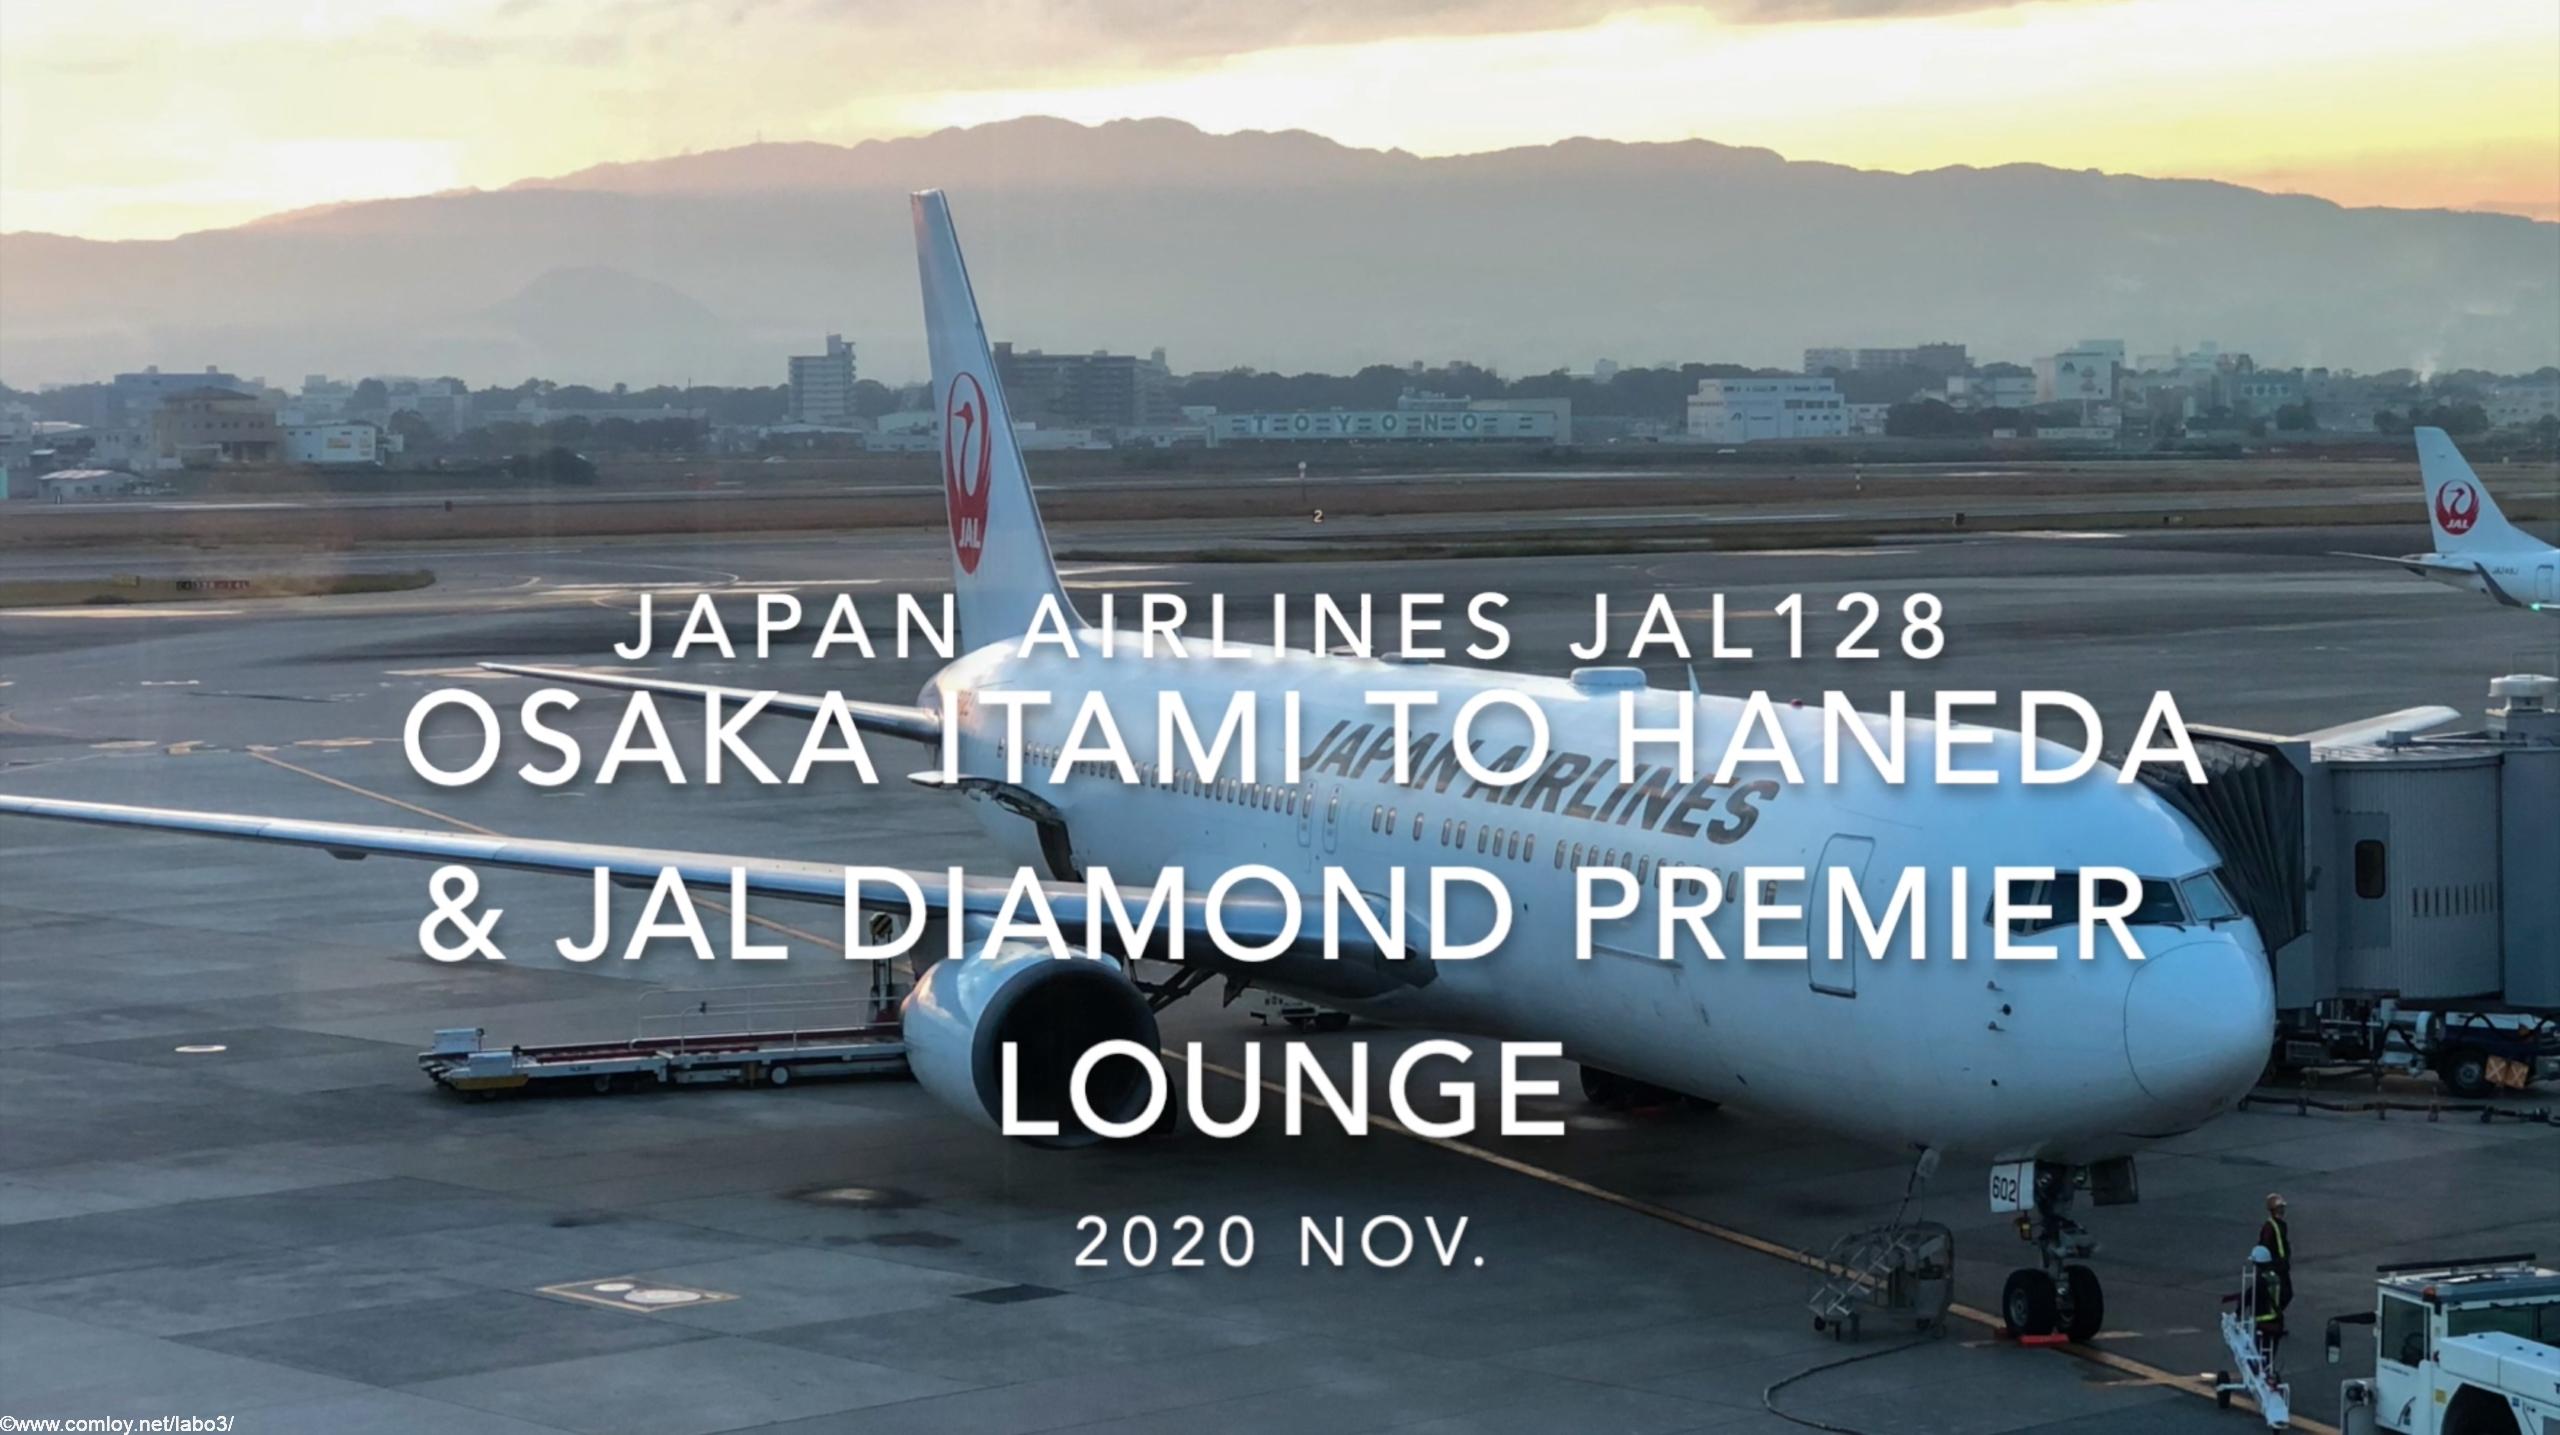 【Flight Report】2020 NOV Japan Airlines JAL128 OSAKA ITAMI TO HANEDA and Diamond Premier Lounge 日本航空 伊丹 - 羽田 搭乗記